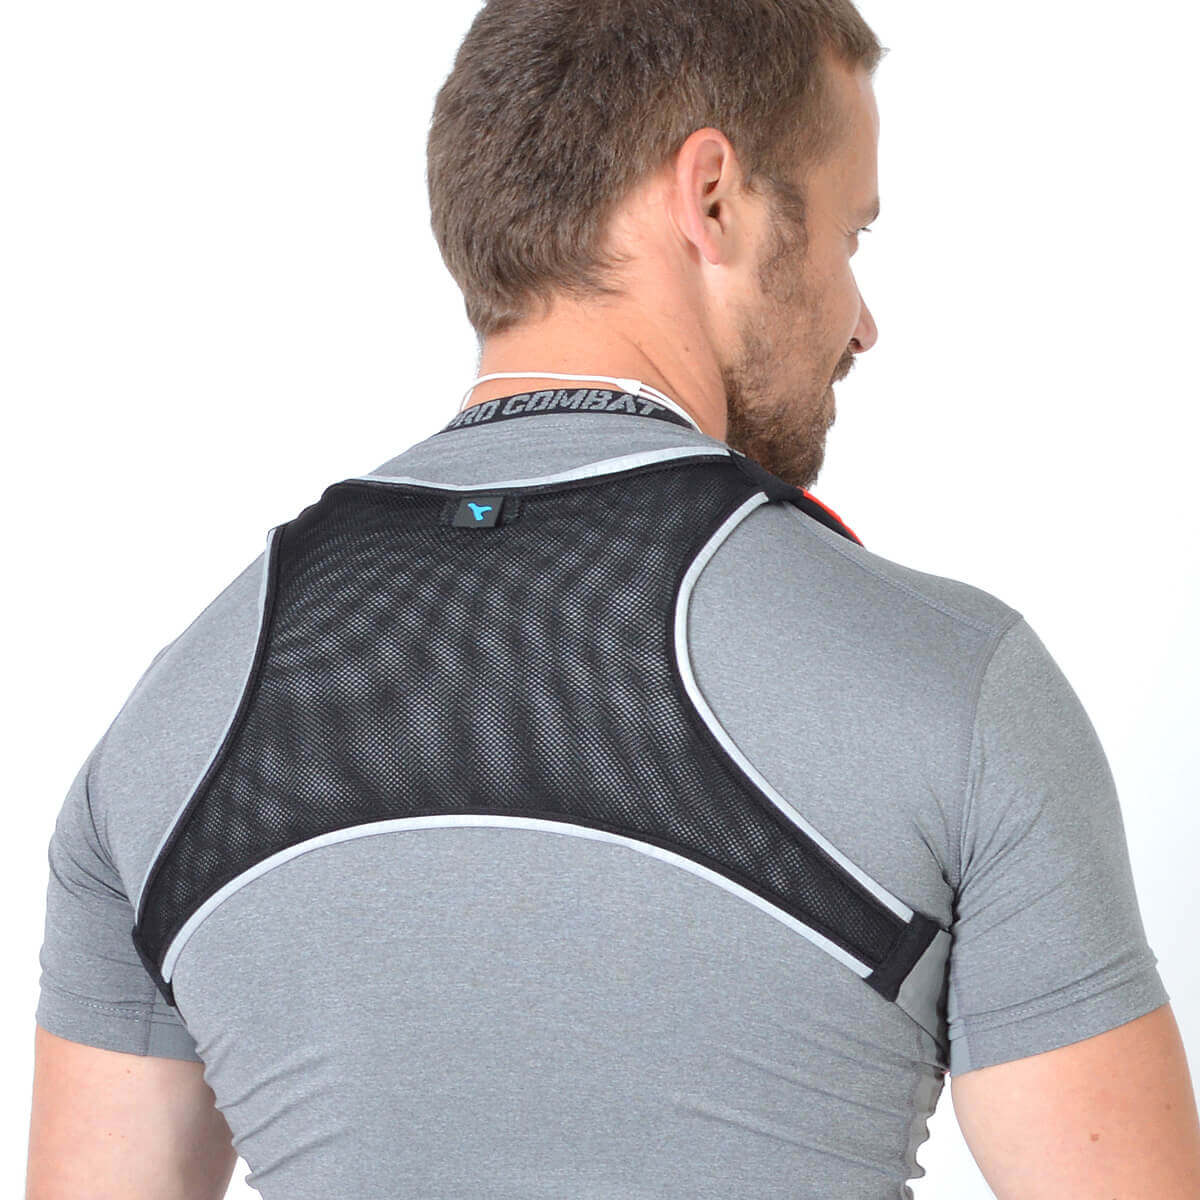 ultralight running vest for smartphone, keys & co. - URBAN TOOL